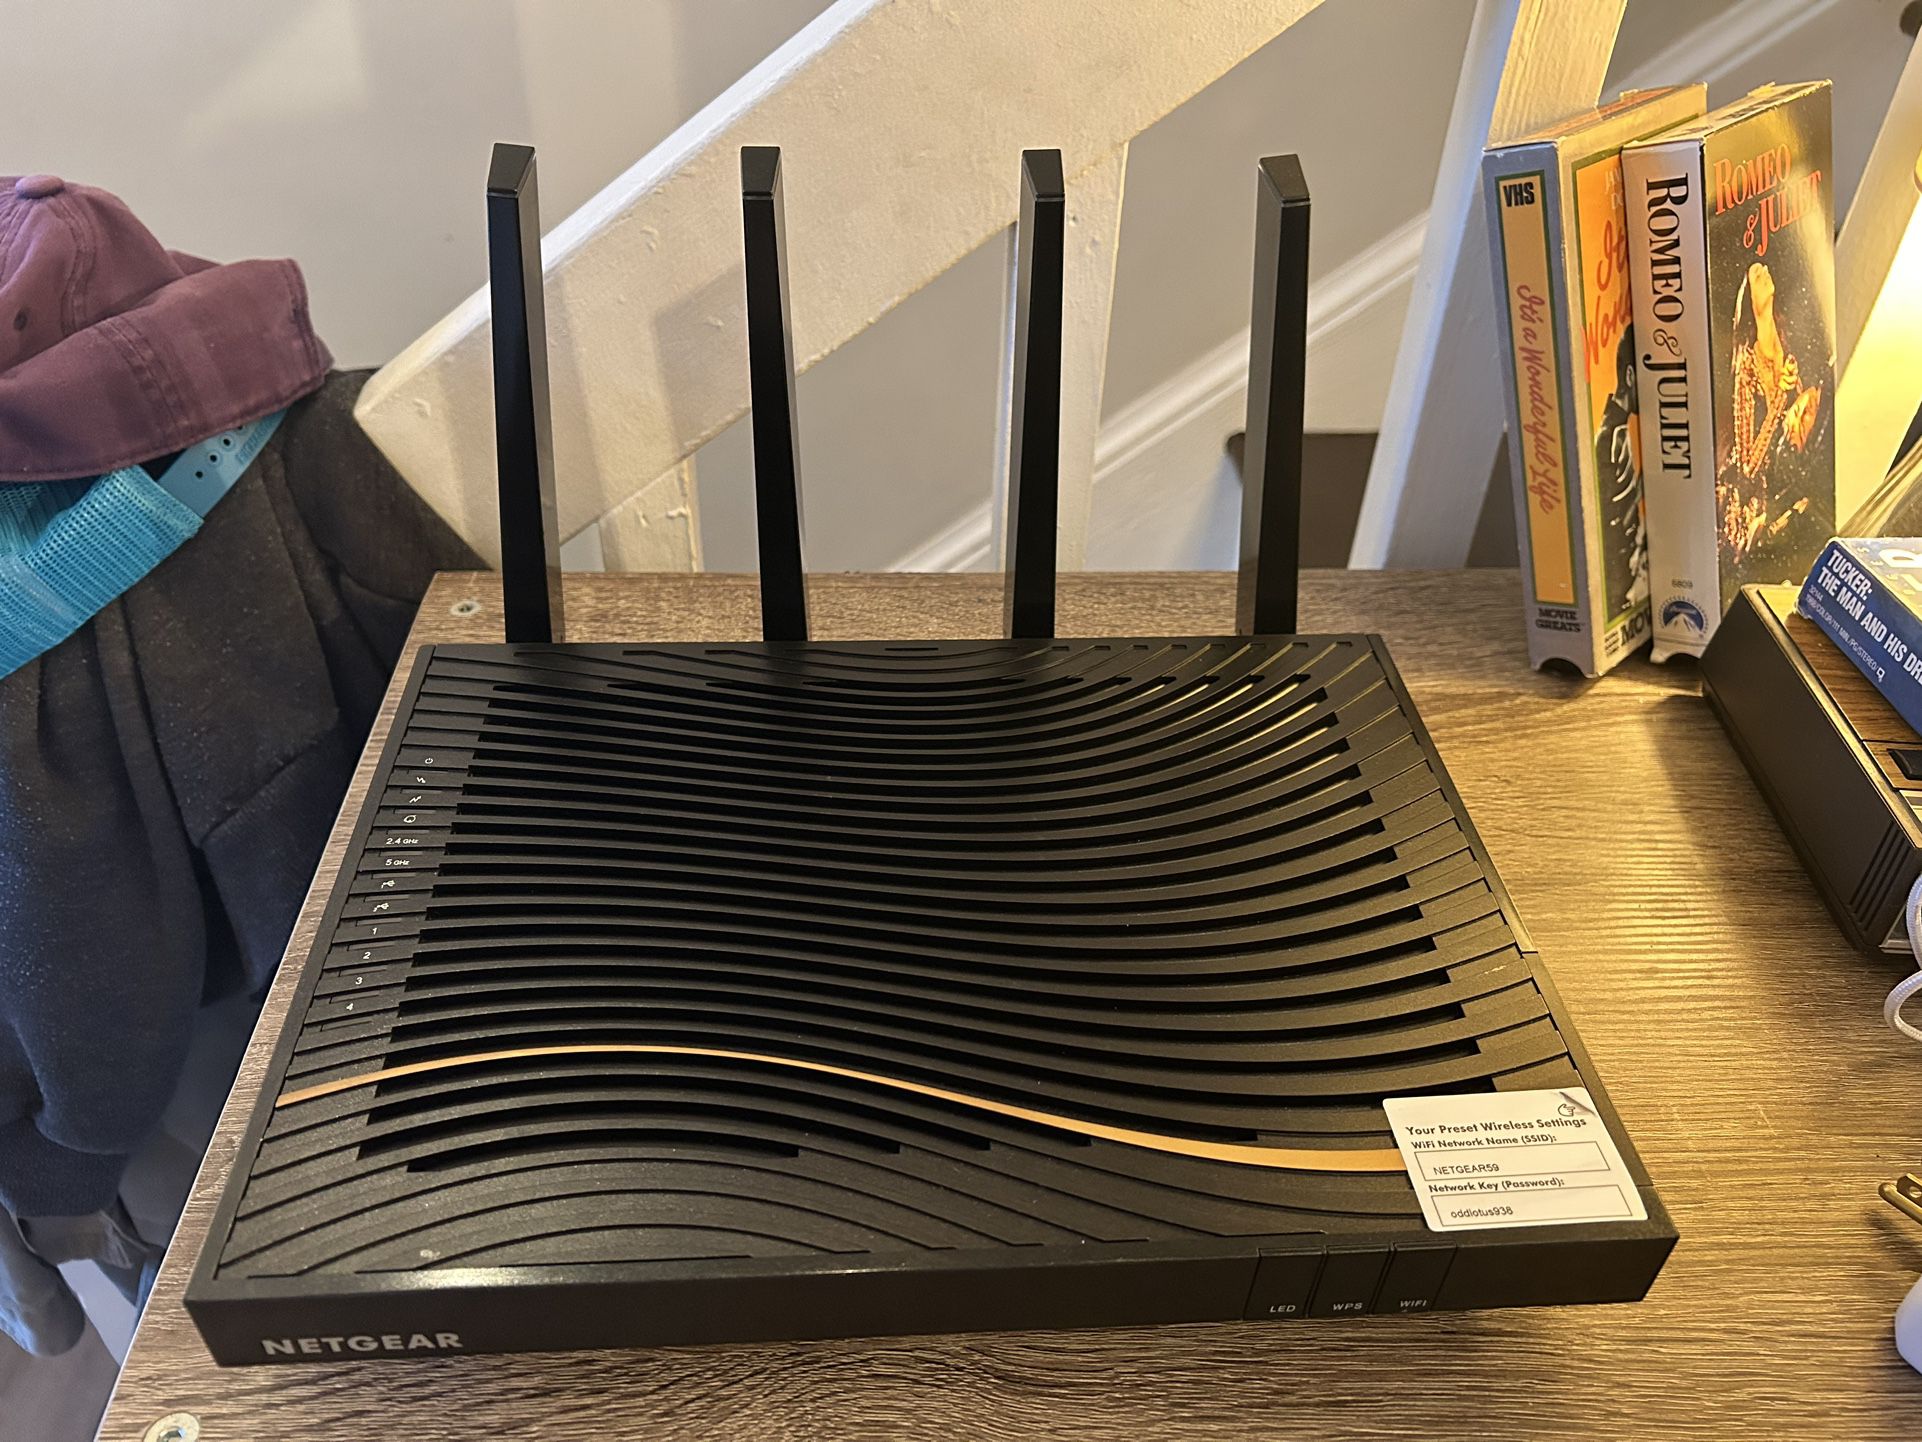 Netgear Nighthawk X4 WiFi Modem Router